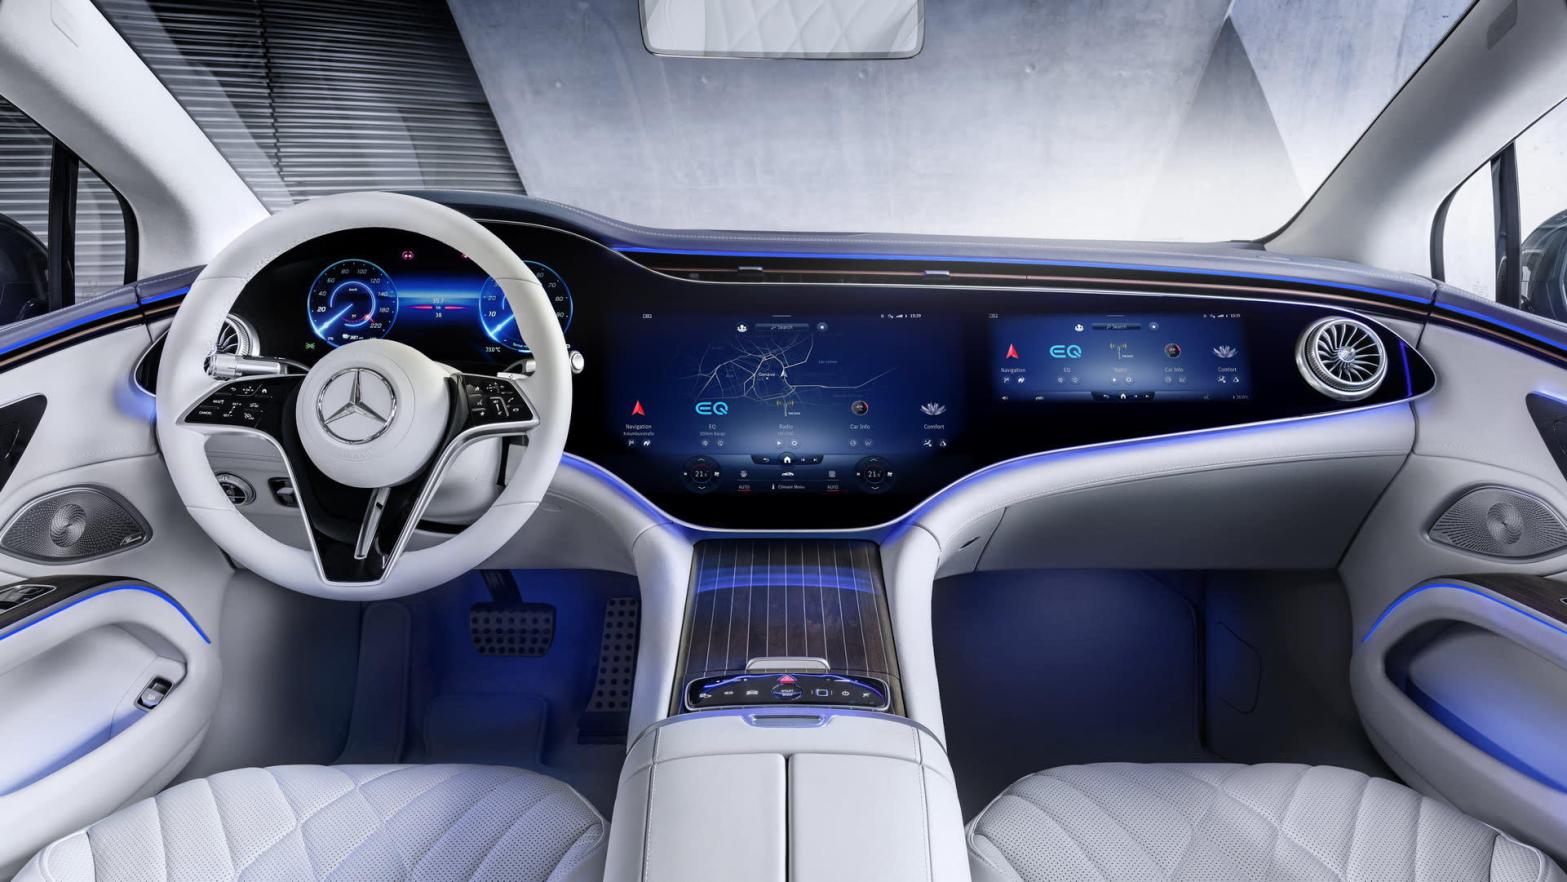 Take A Look At The 2022 Mercedes-Benz EQS's Massive Screen